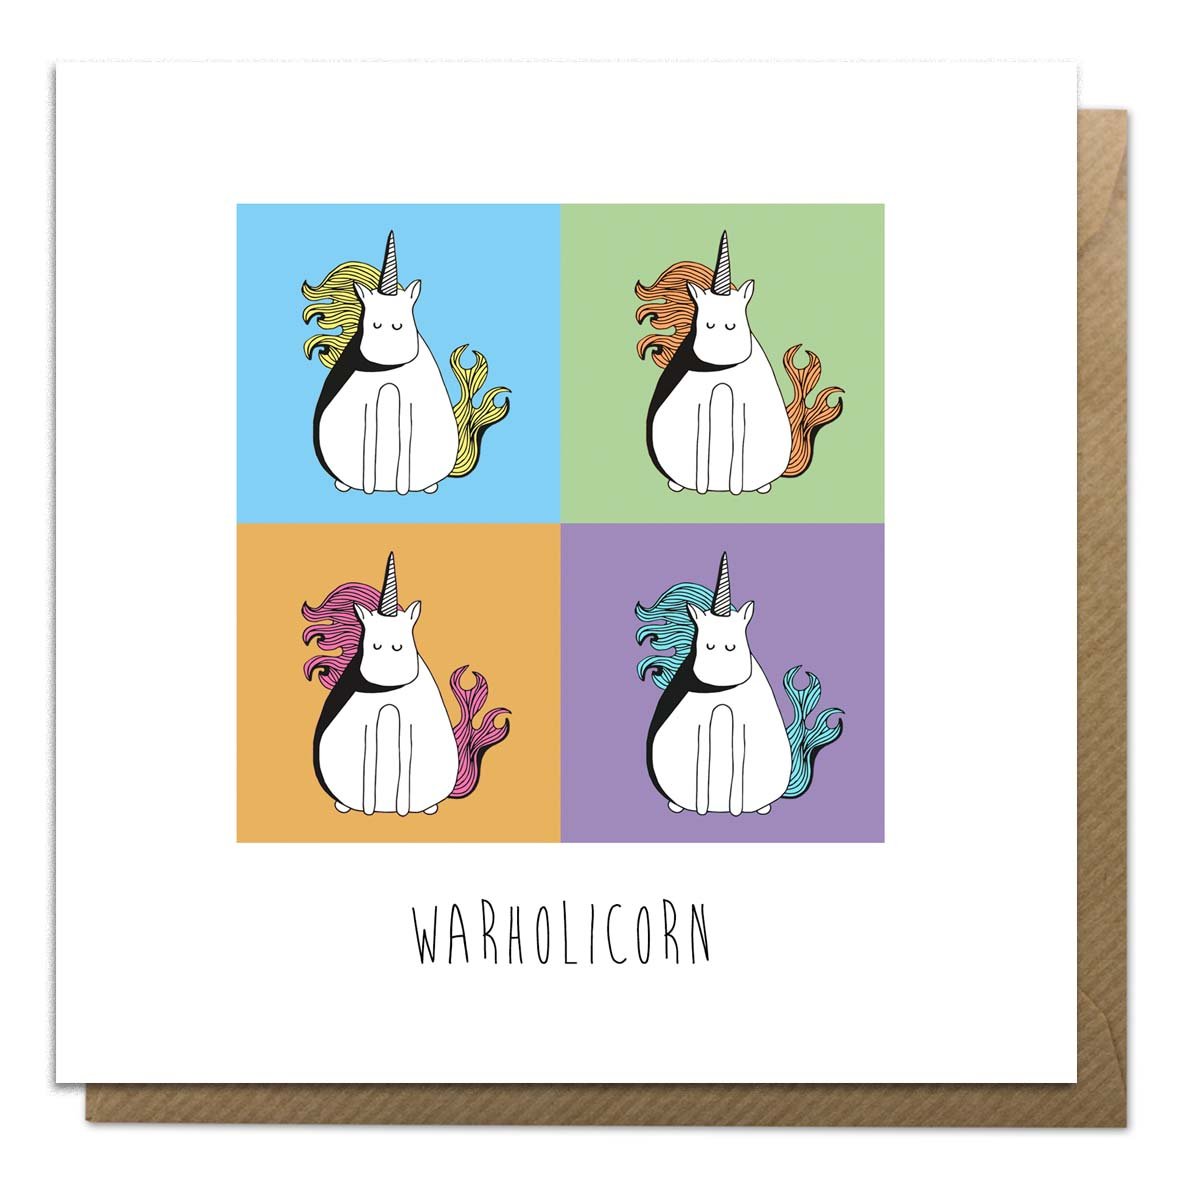 Greeting card featuring an illustration of Warhol unicorns